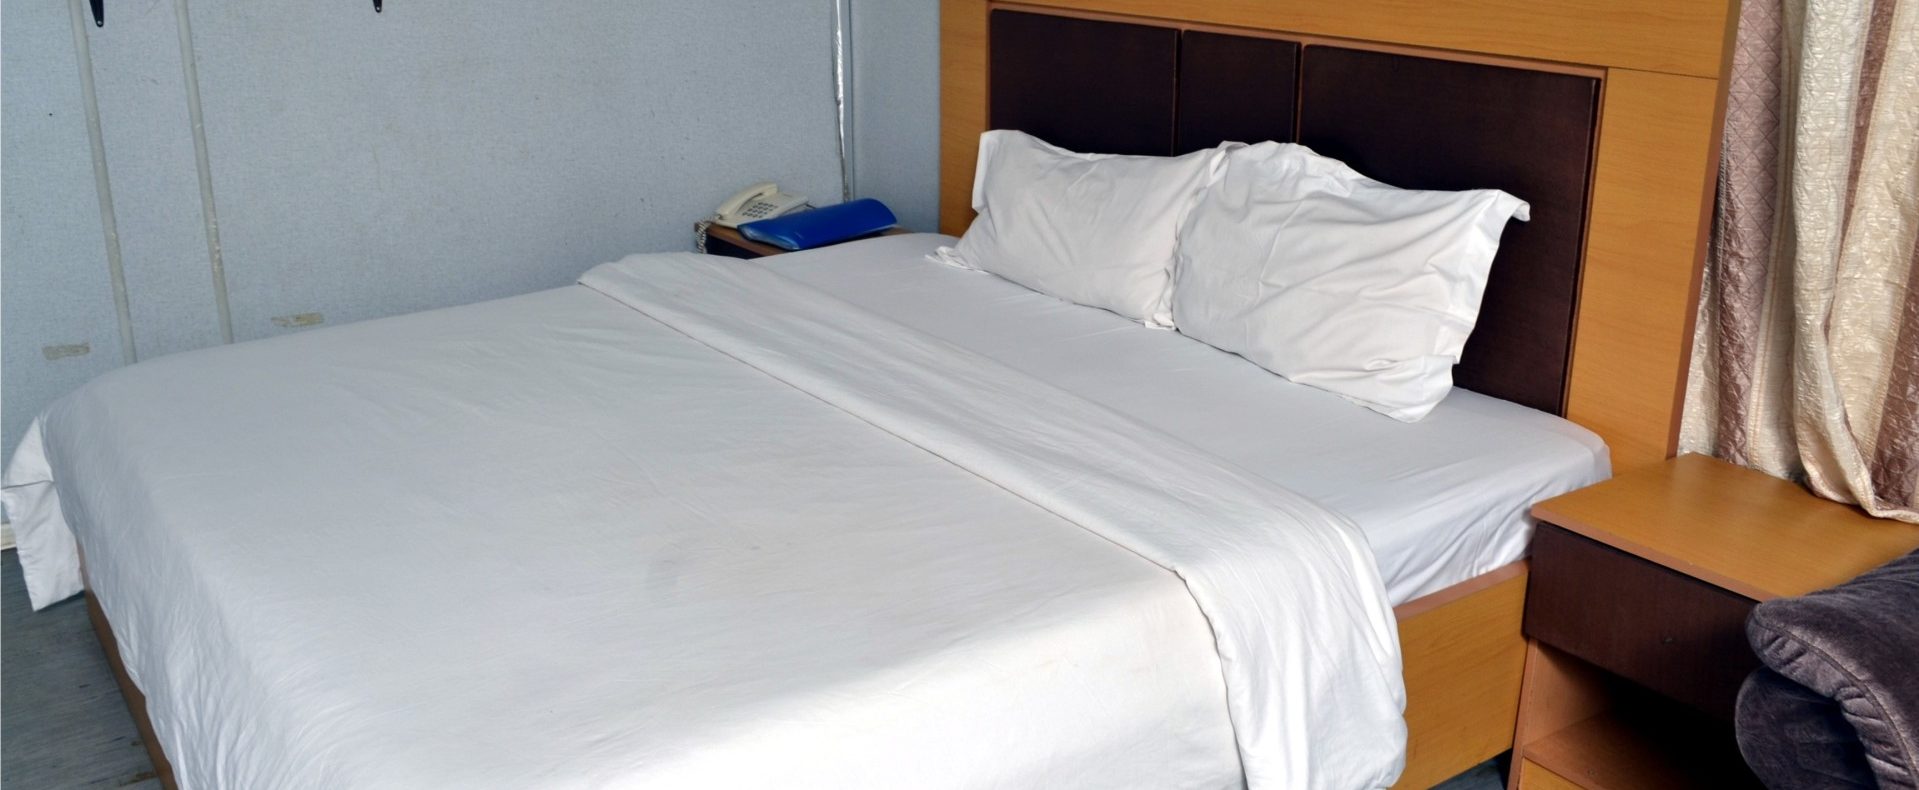 Hotel World Traveler I Room Type In Abuja Nigeria